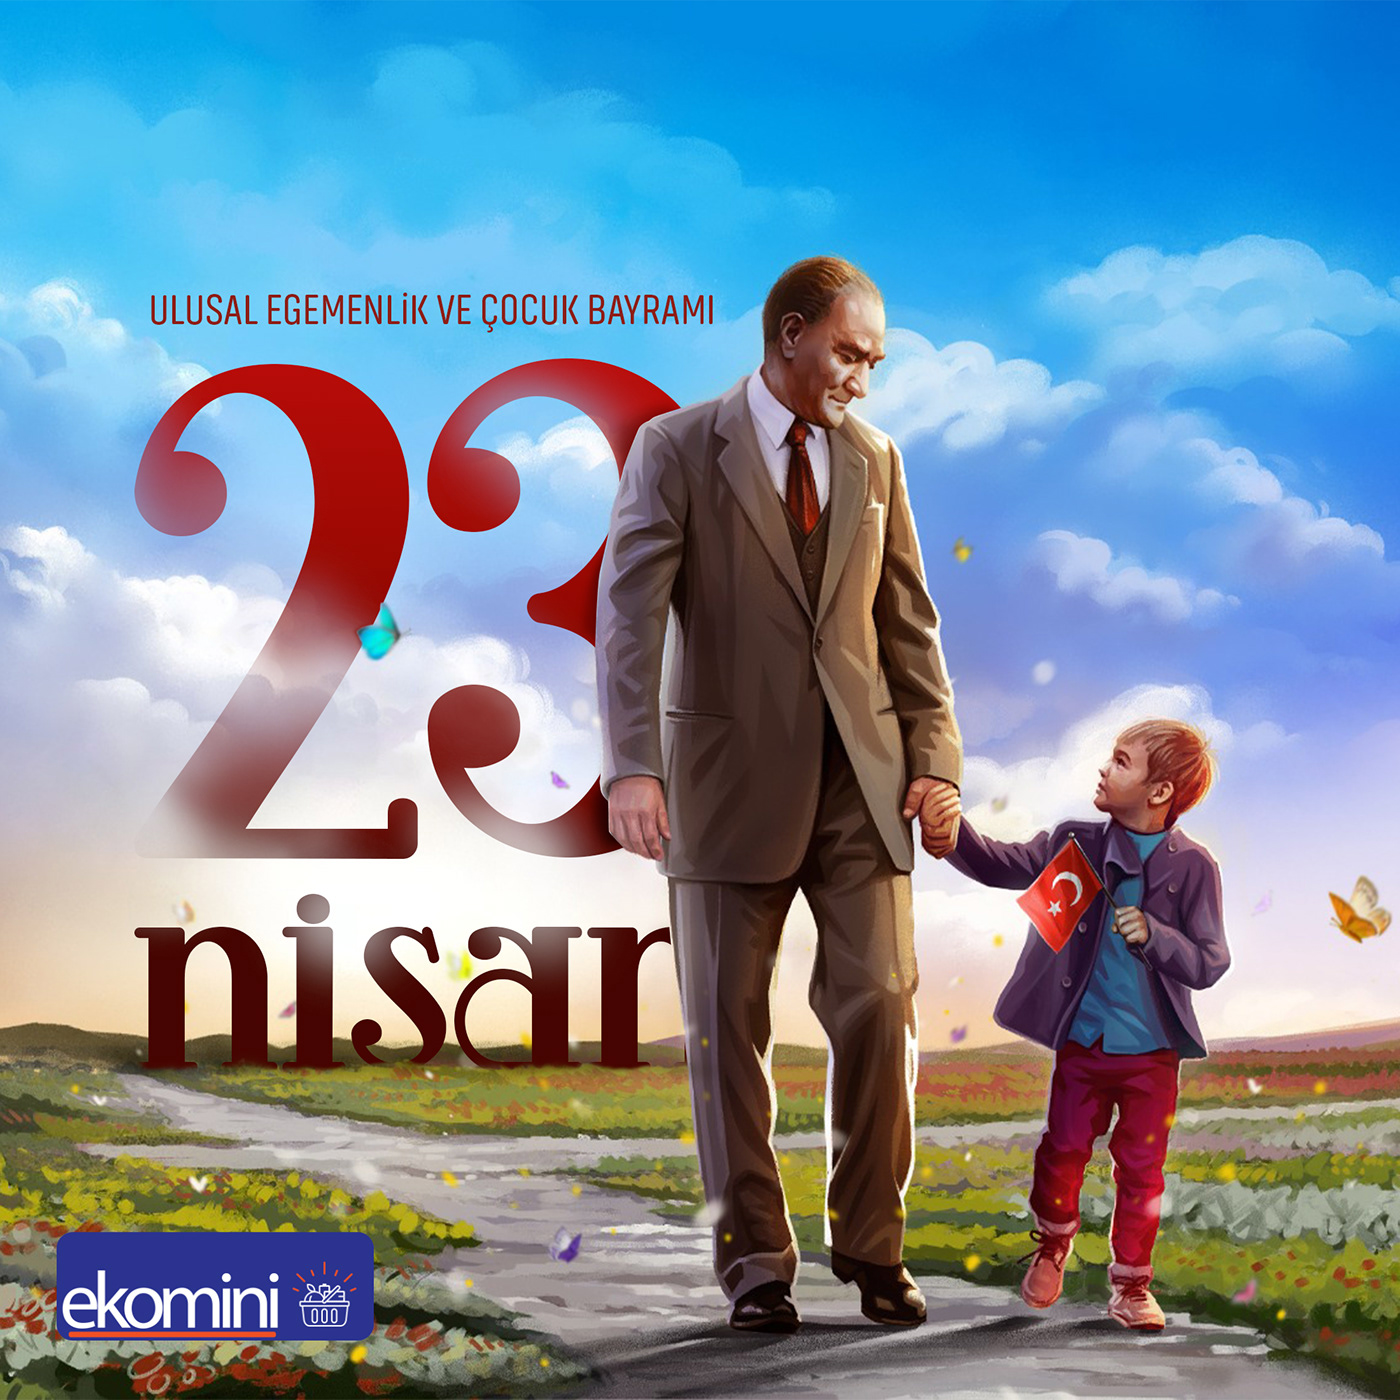 23 nisan Ataturk banner Mustafa Kemal Atatürk post sosyal medya